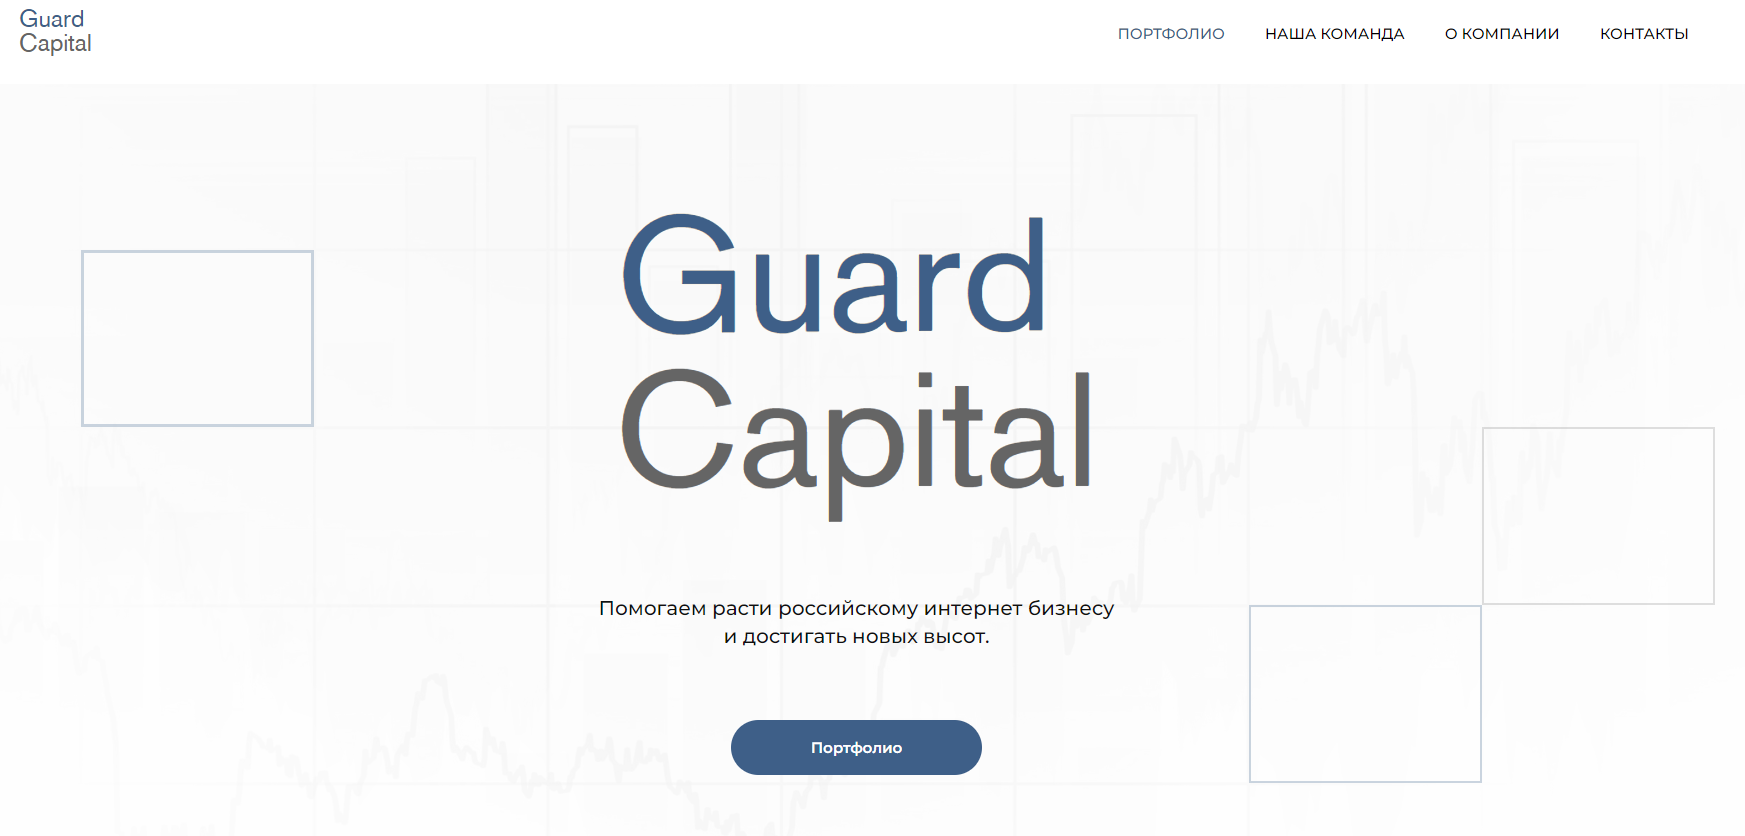 Guard Capital